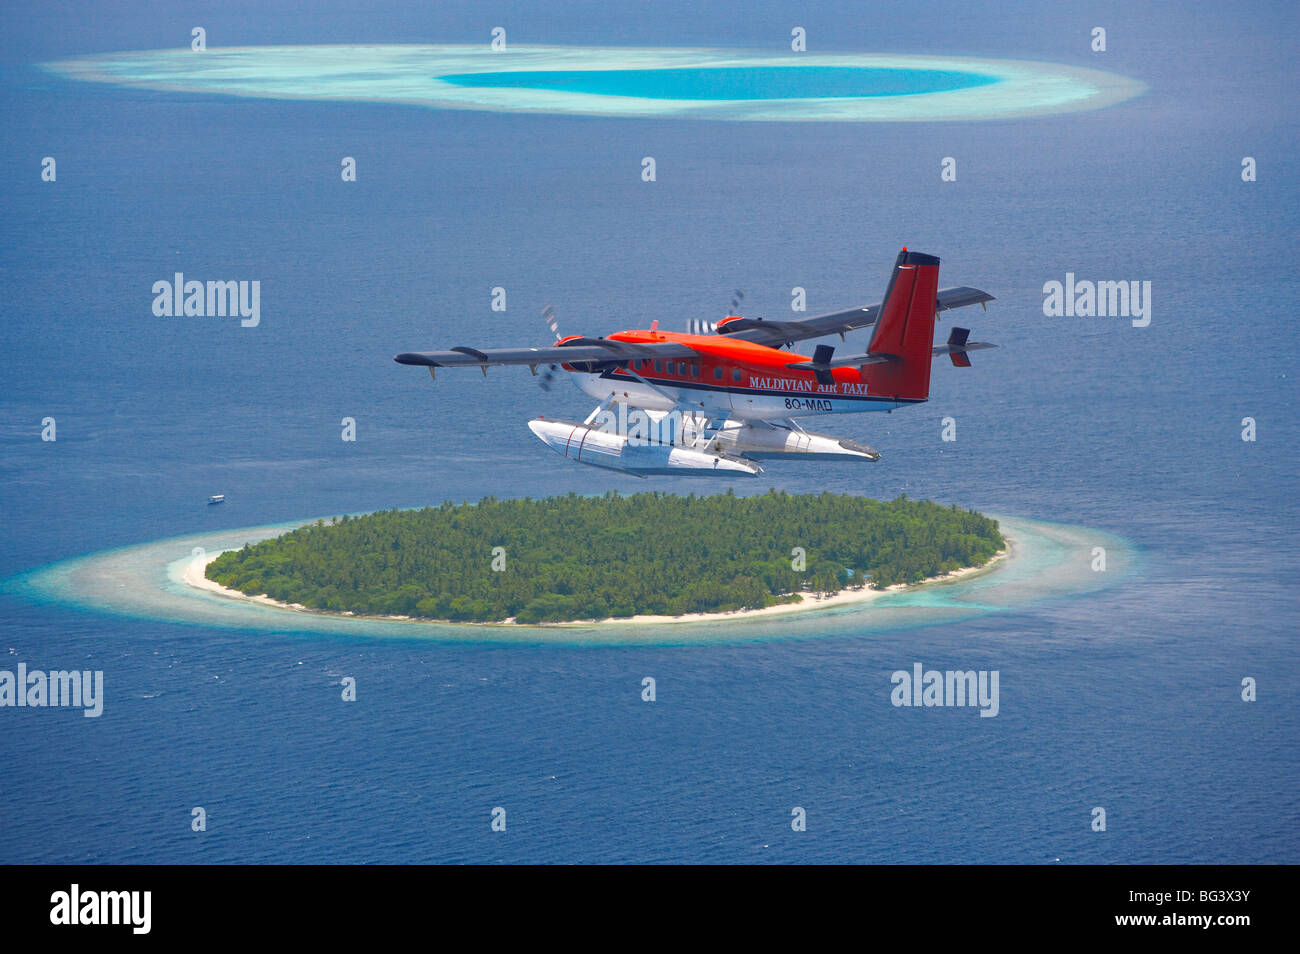 Maldivian Air Taxi flying above island, Maldives, Indian Ocean, Asia Stock Photo